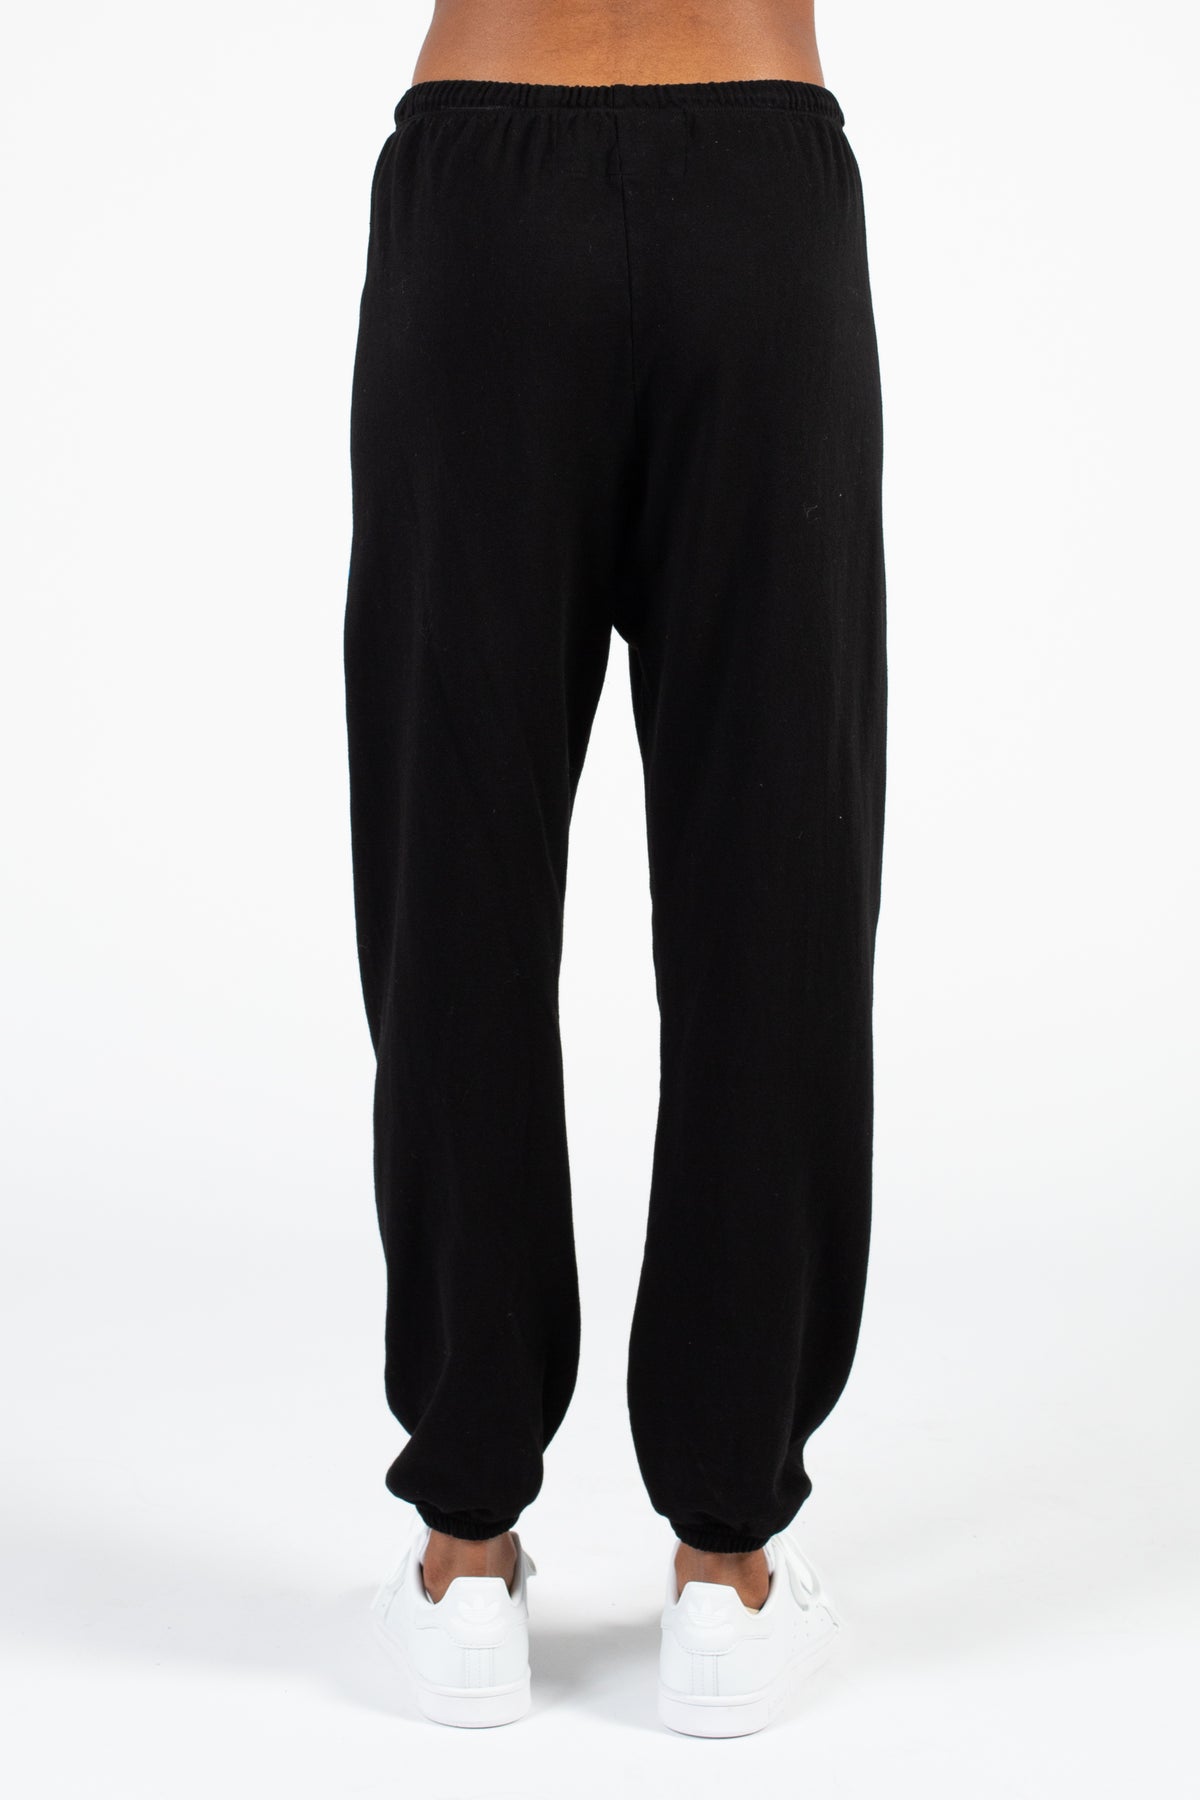 Reebok Sweatpants Mens L Dark Grey Black Logo Cotton Relaxed